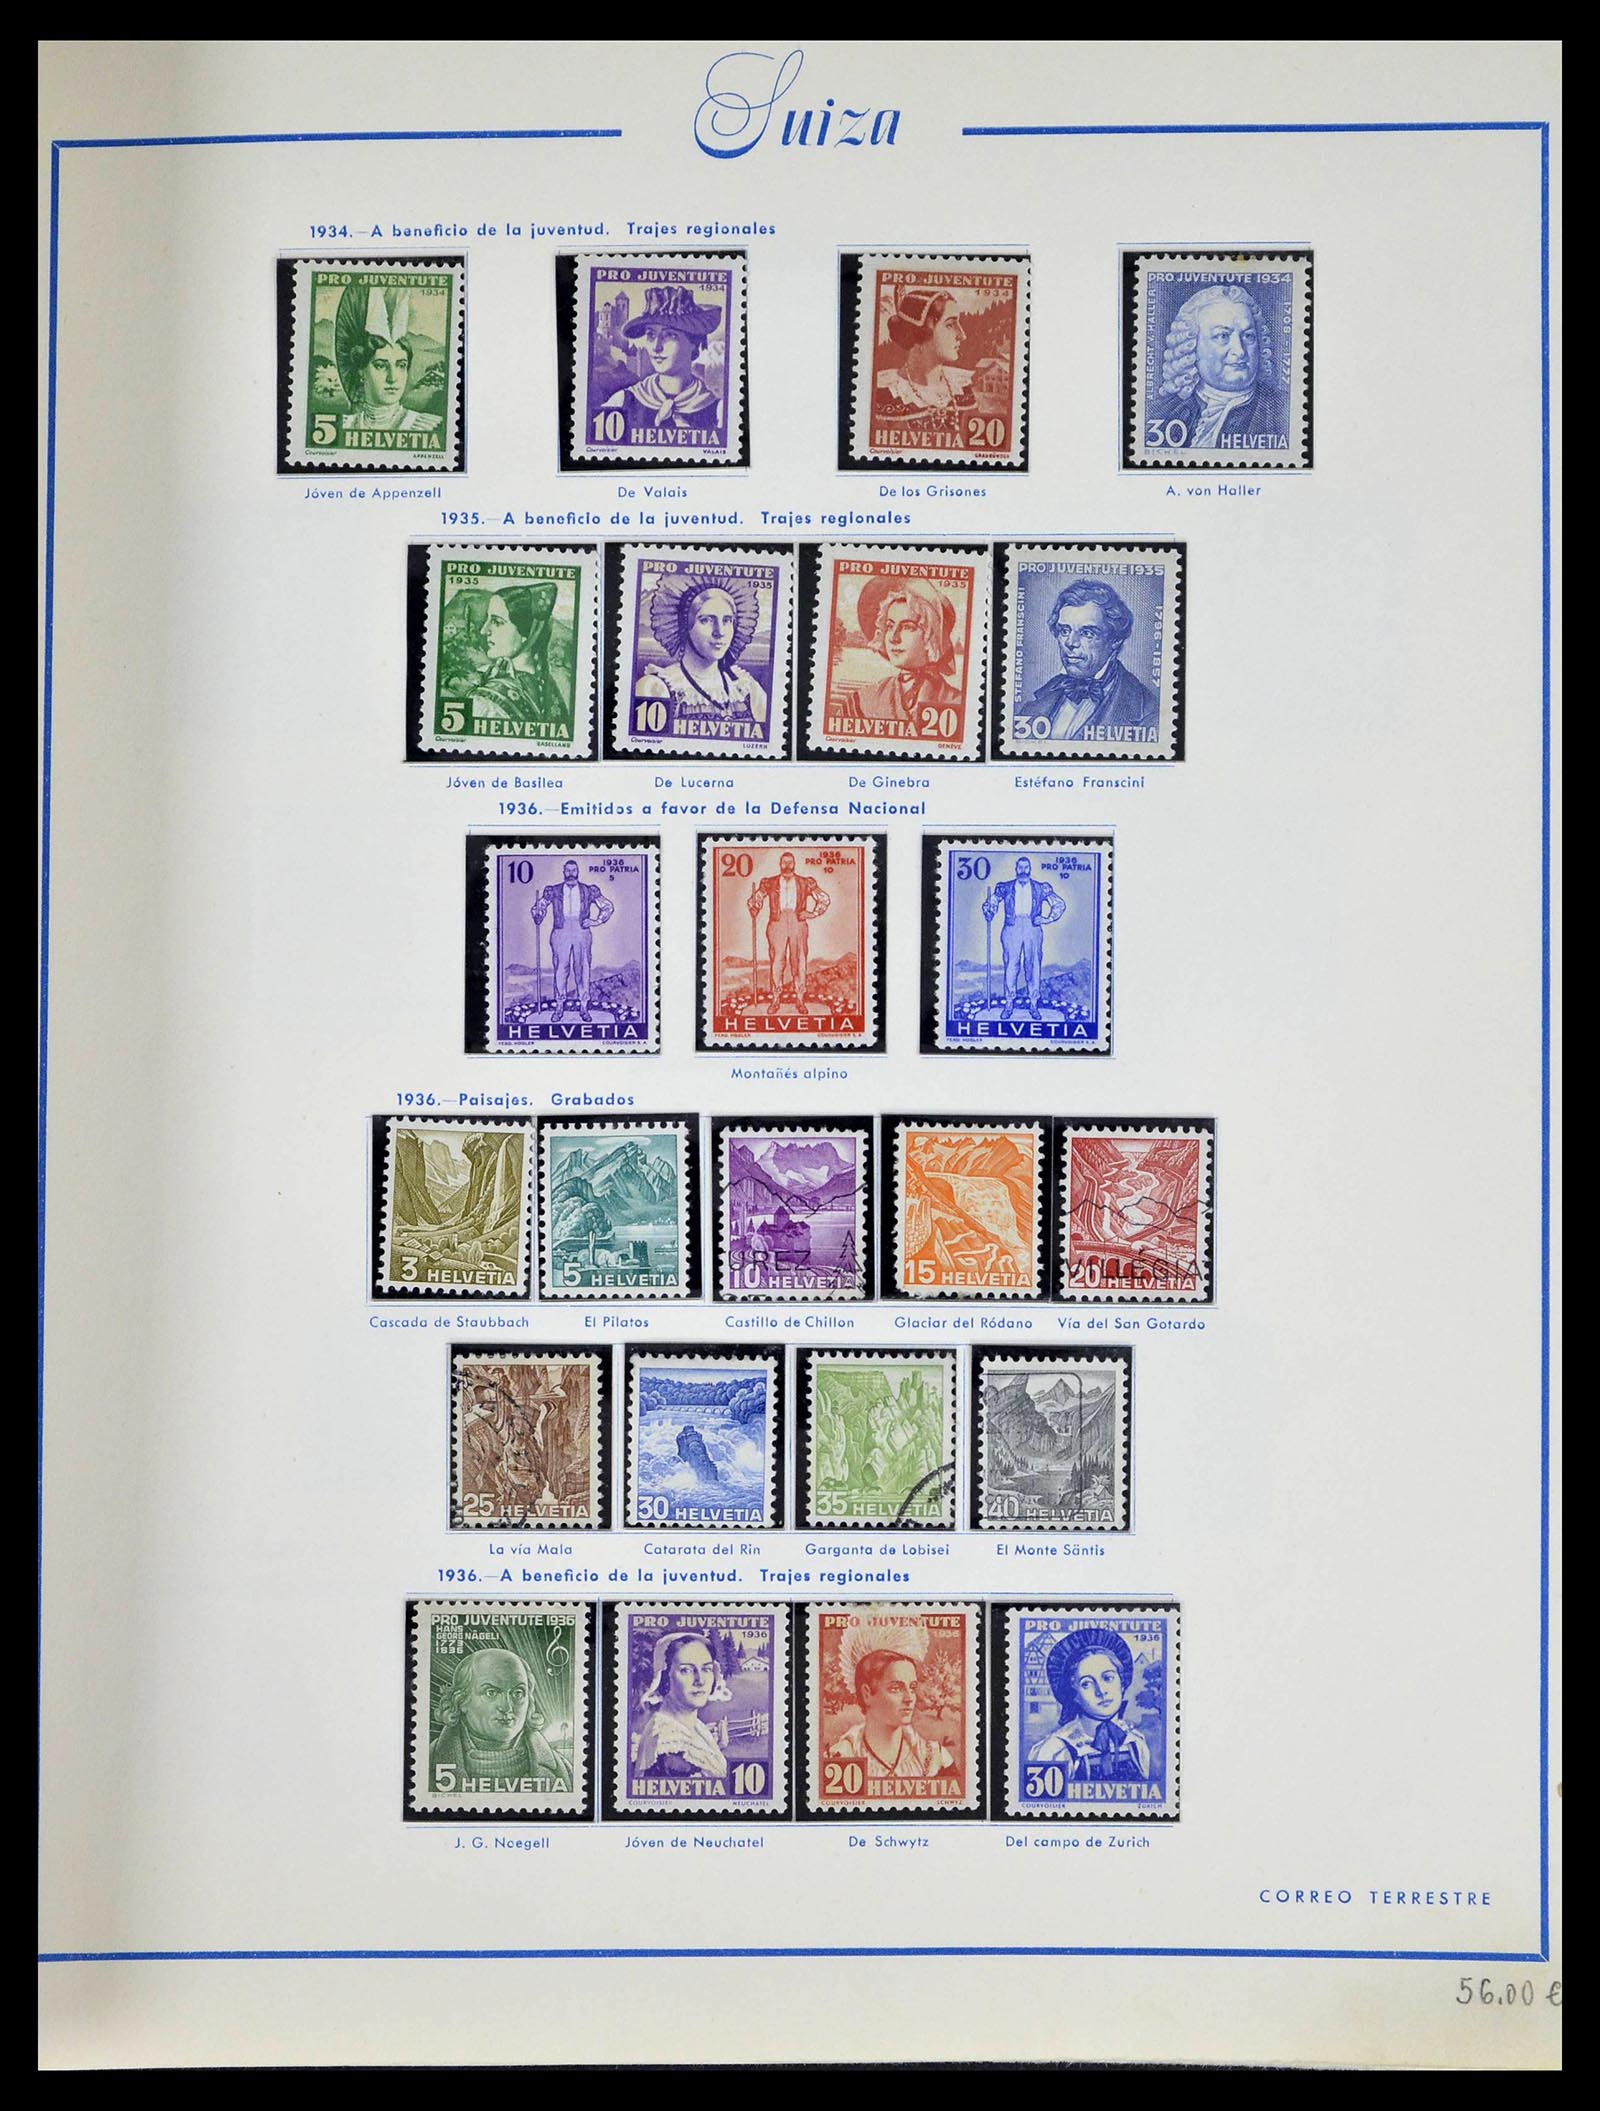 39217 0017 - Stamp collection 39217 Switzerland 1850-1986.